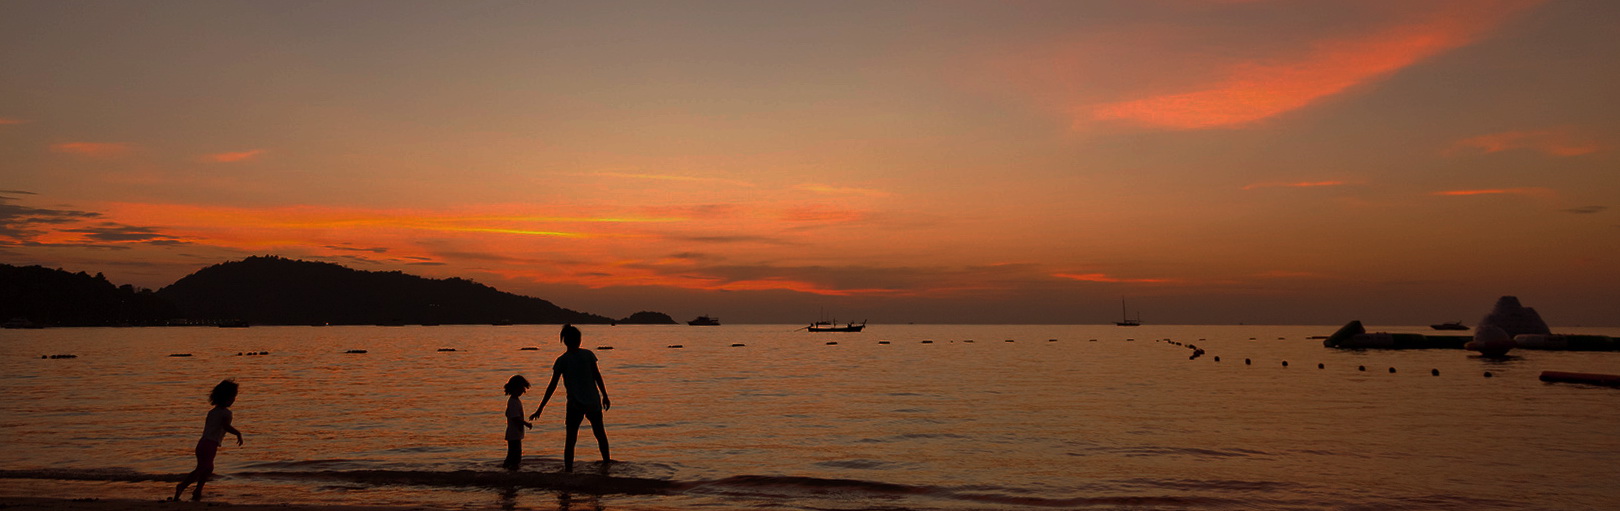 Phuket, Thailand - March 16, 2011 : Mother and children enjoying the beuatiful sunset at Patong Beach in Phuket